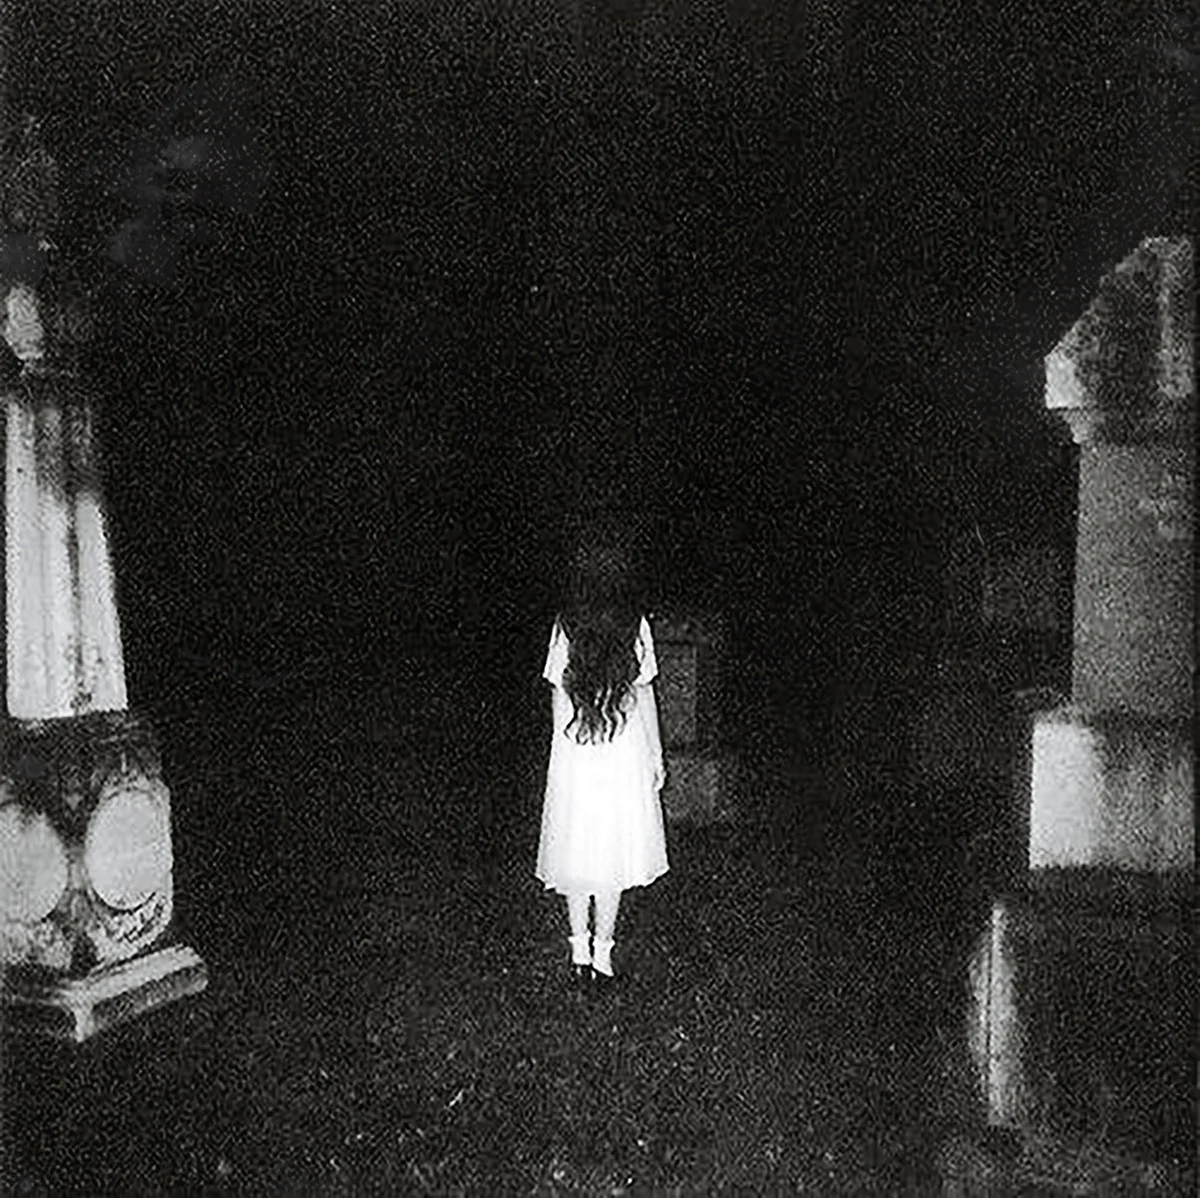 Призрак девочки на кладбище. Картинка